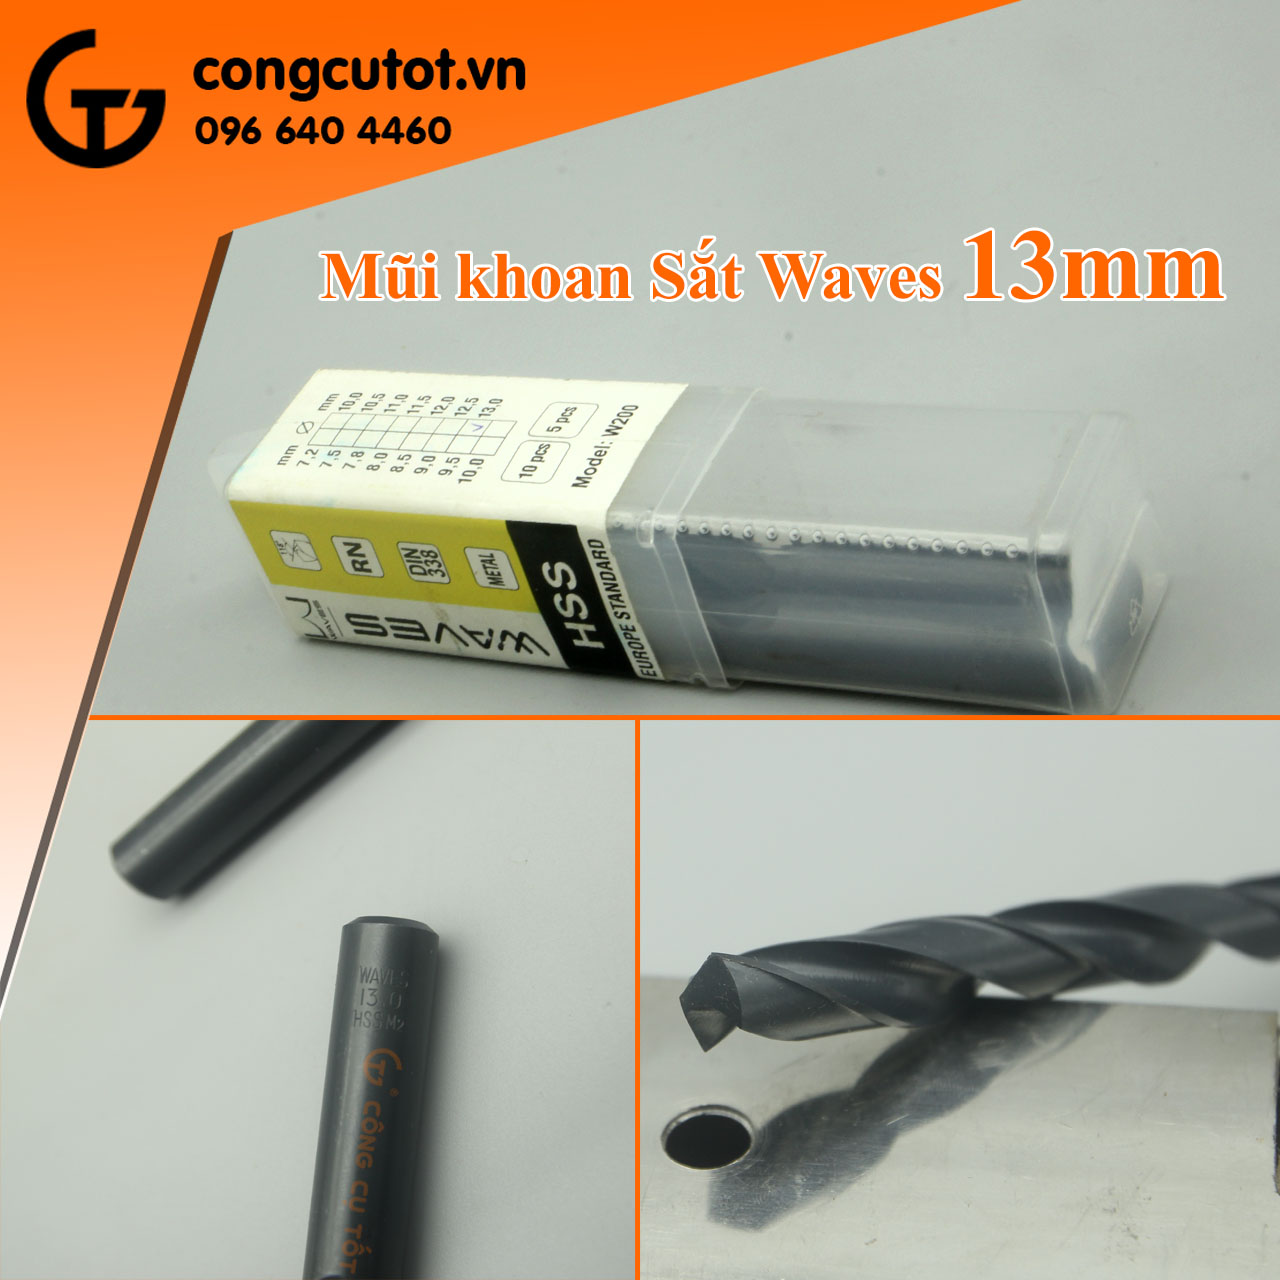 Mũi khoan sắt Wave 13mm dòng W200